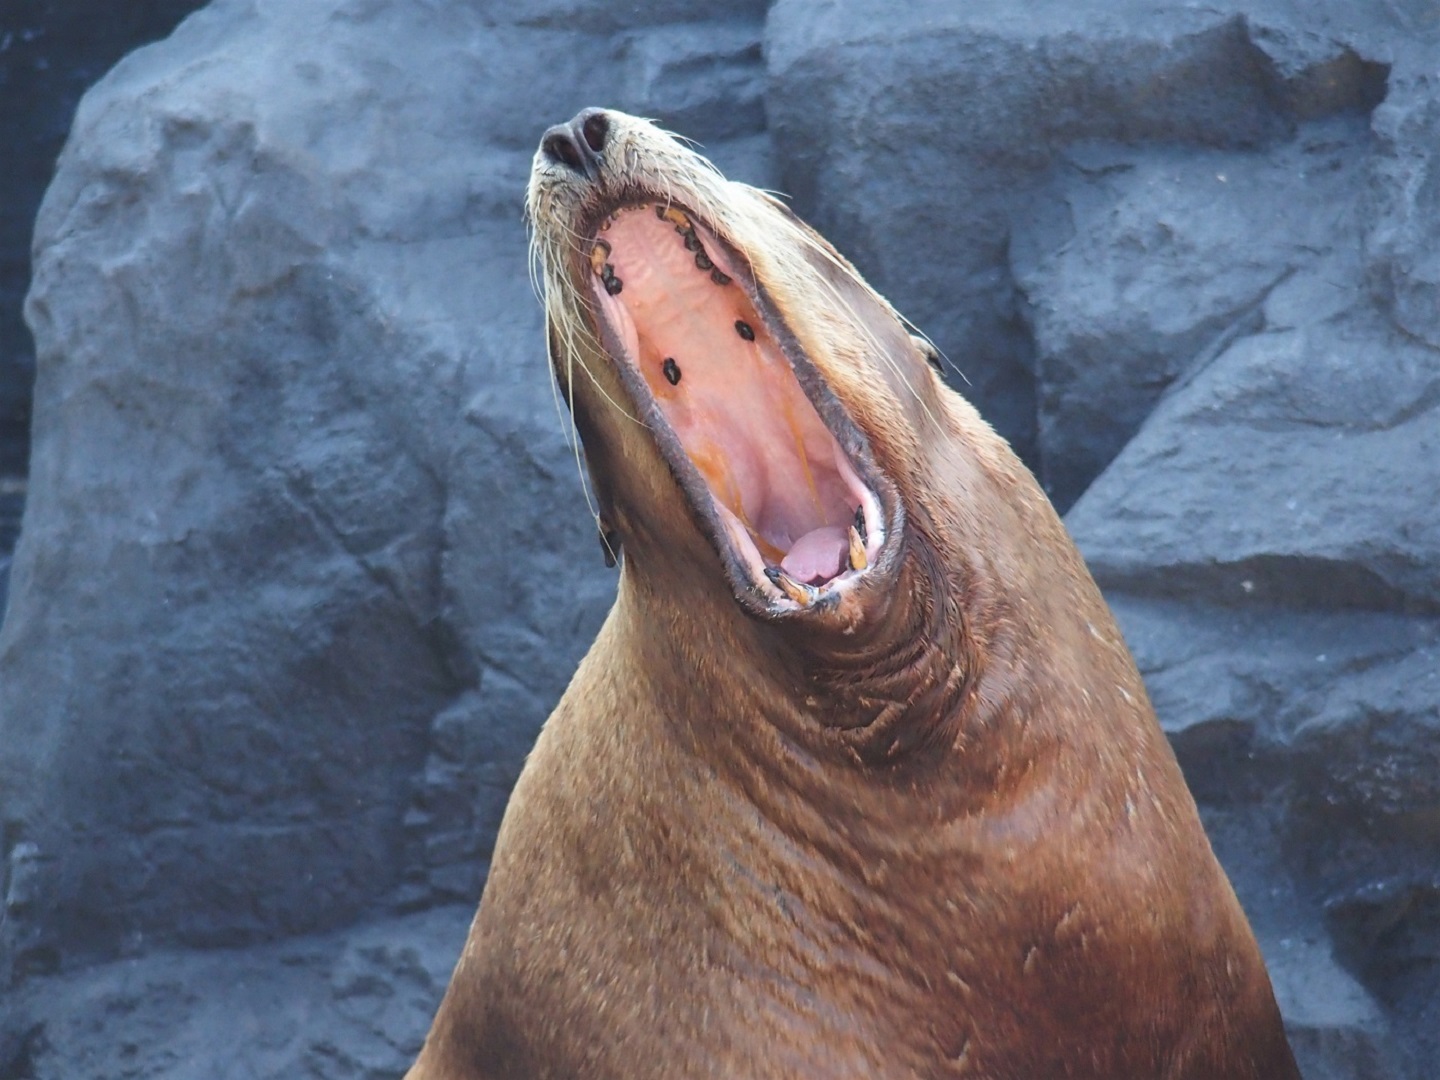 Steller sea lion